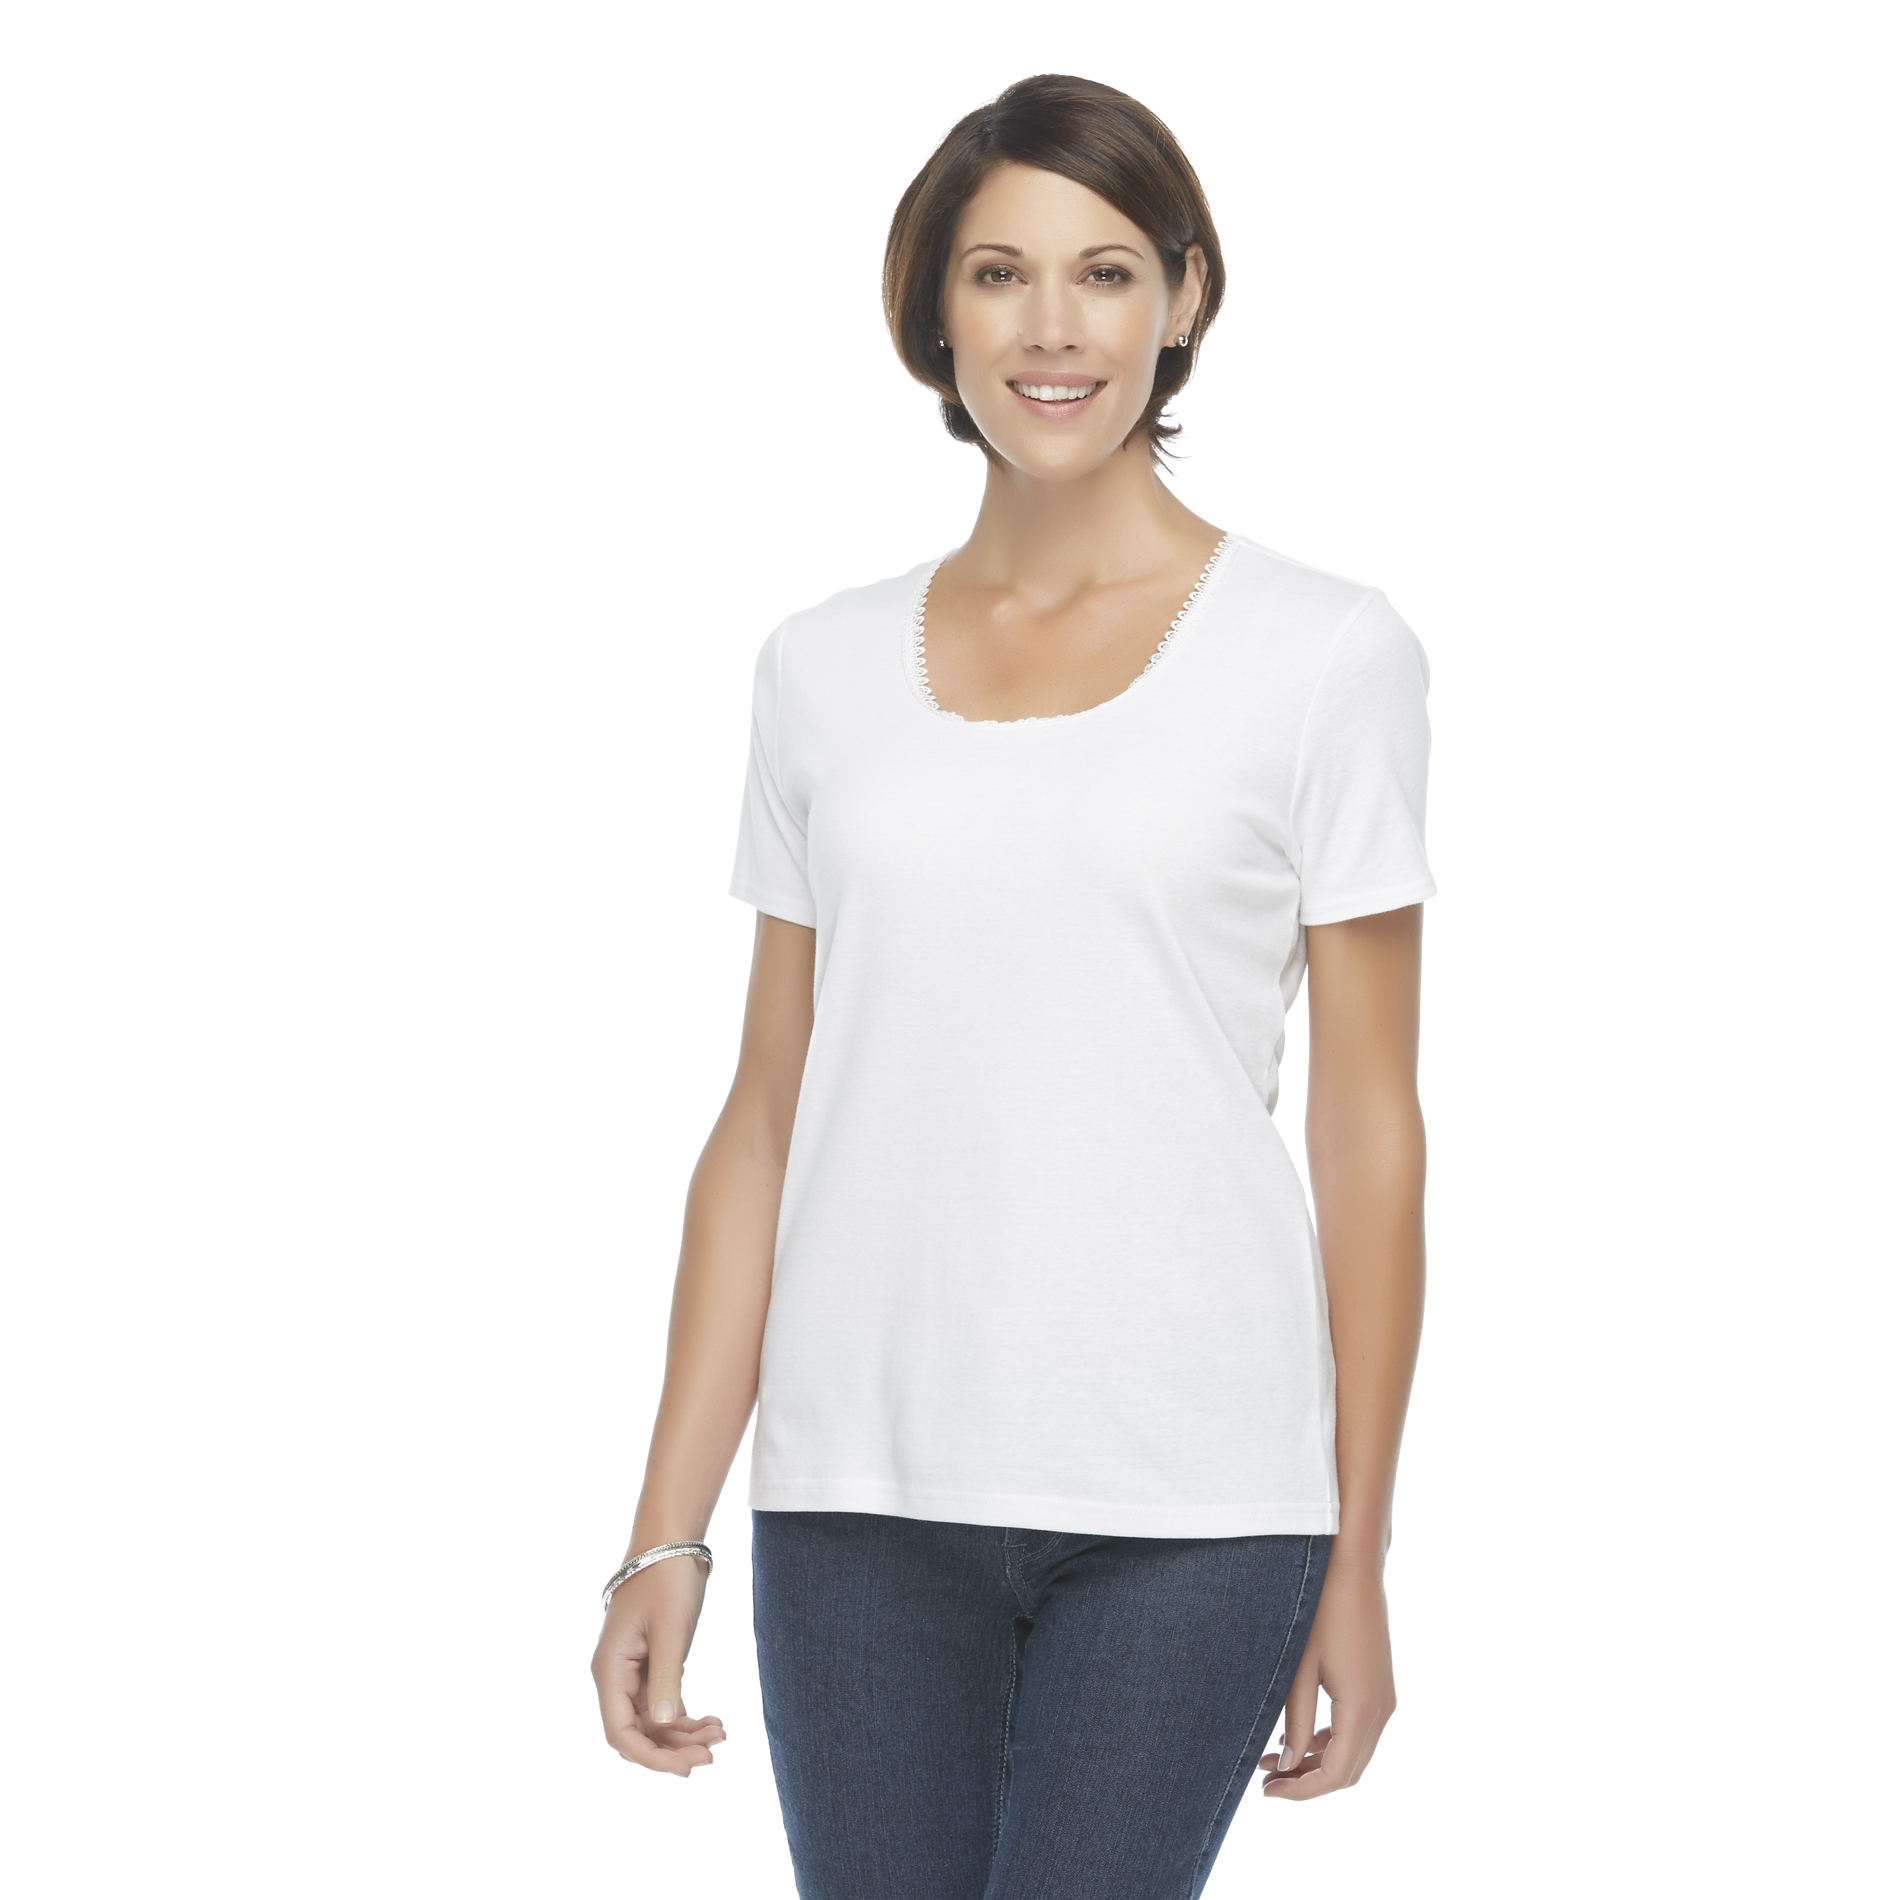 Basic Editions Women's Lace Trim T-Shirt